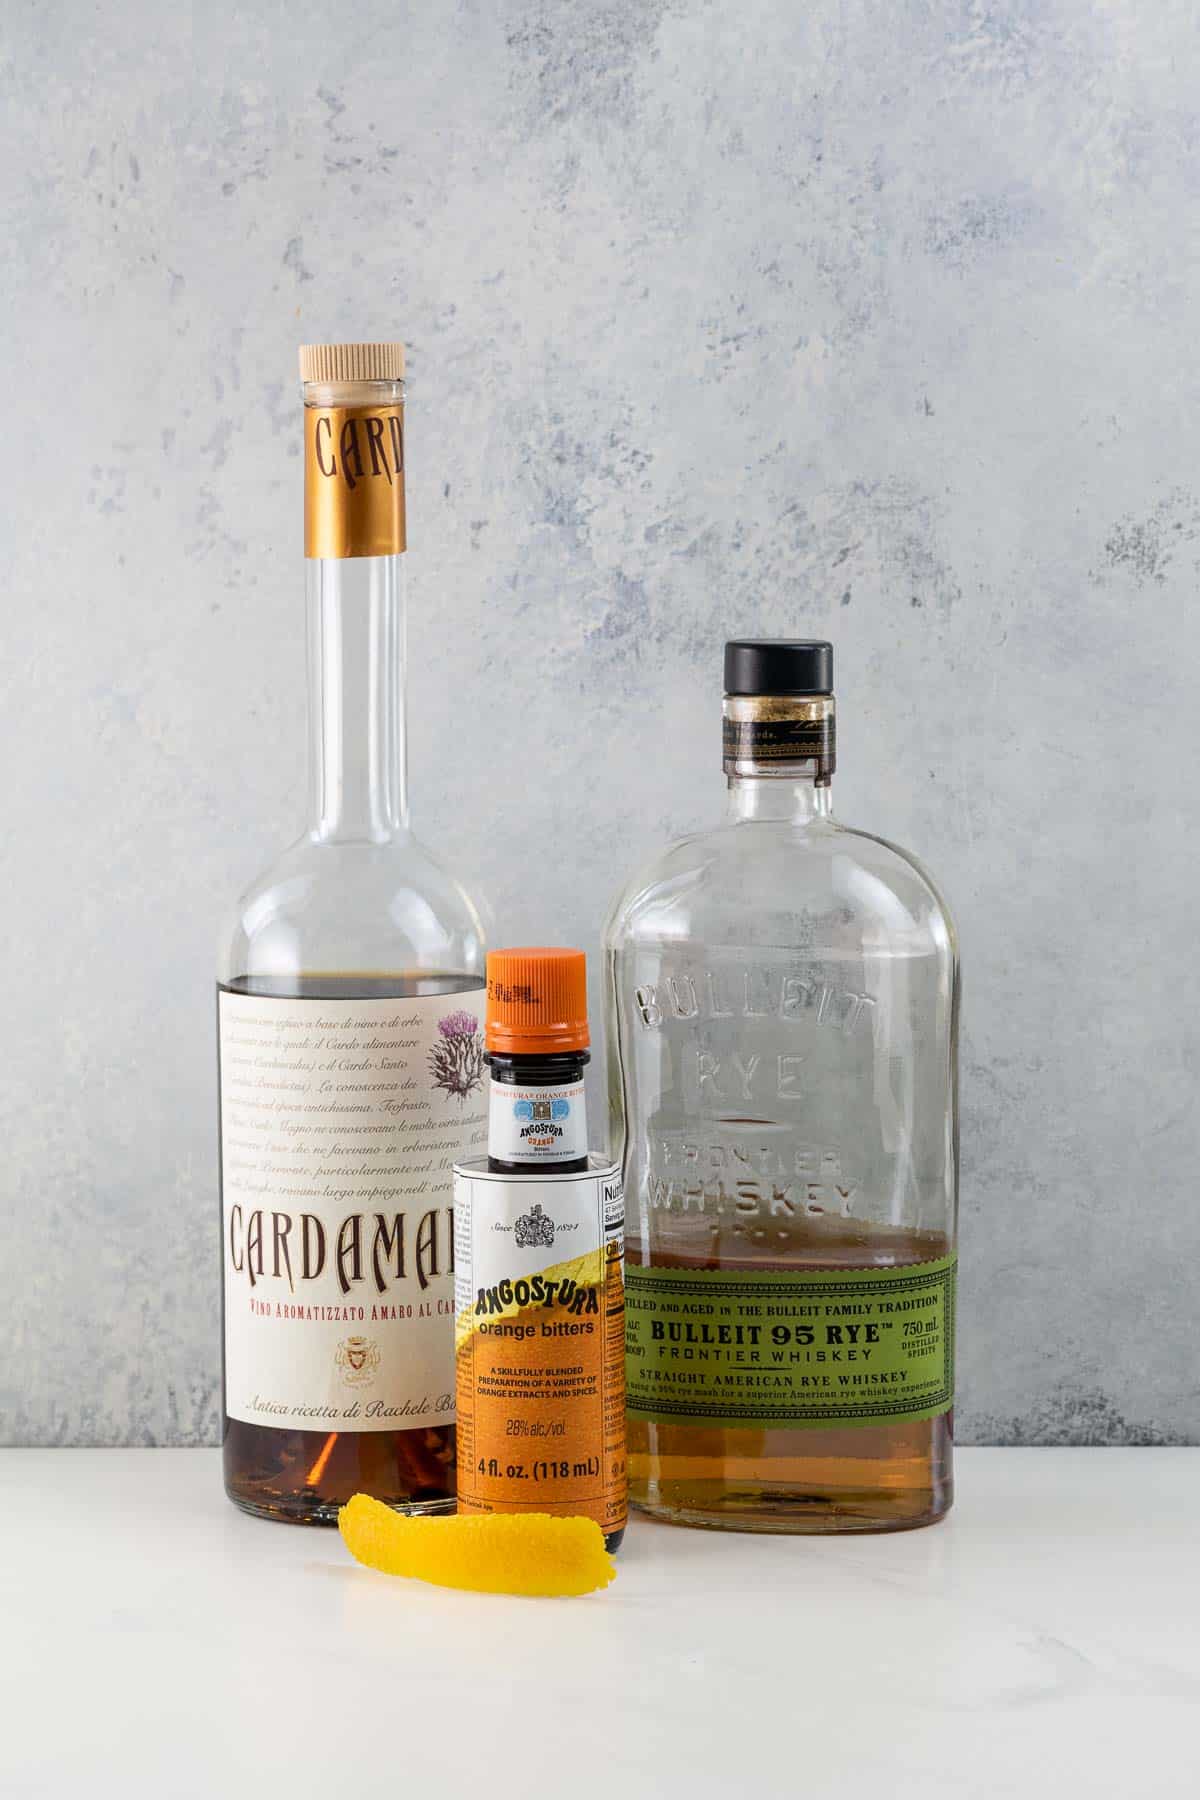 rye whiskey, cardamaro vino amaro, orange bitters, and an orange twist for a corduroy cocktail